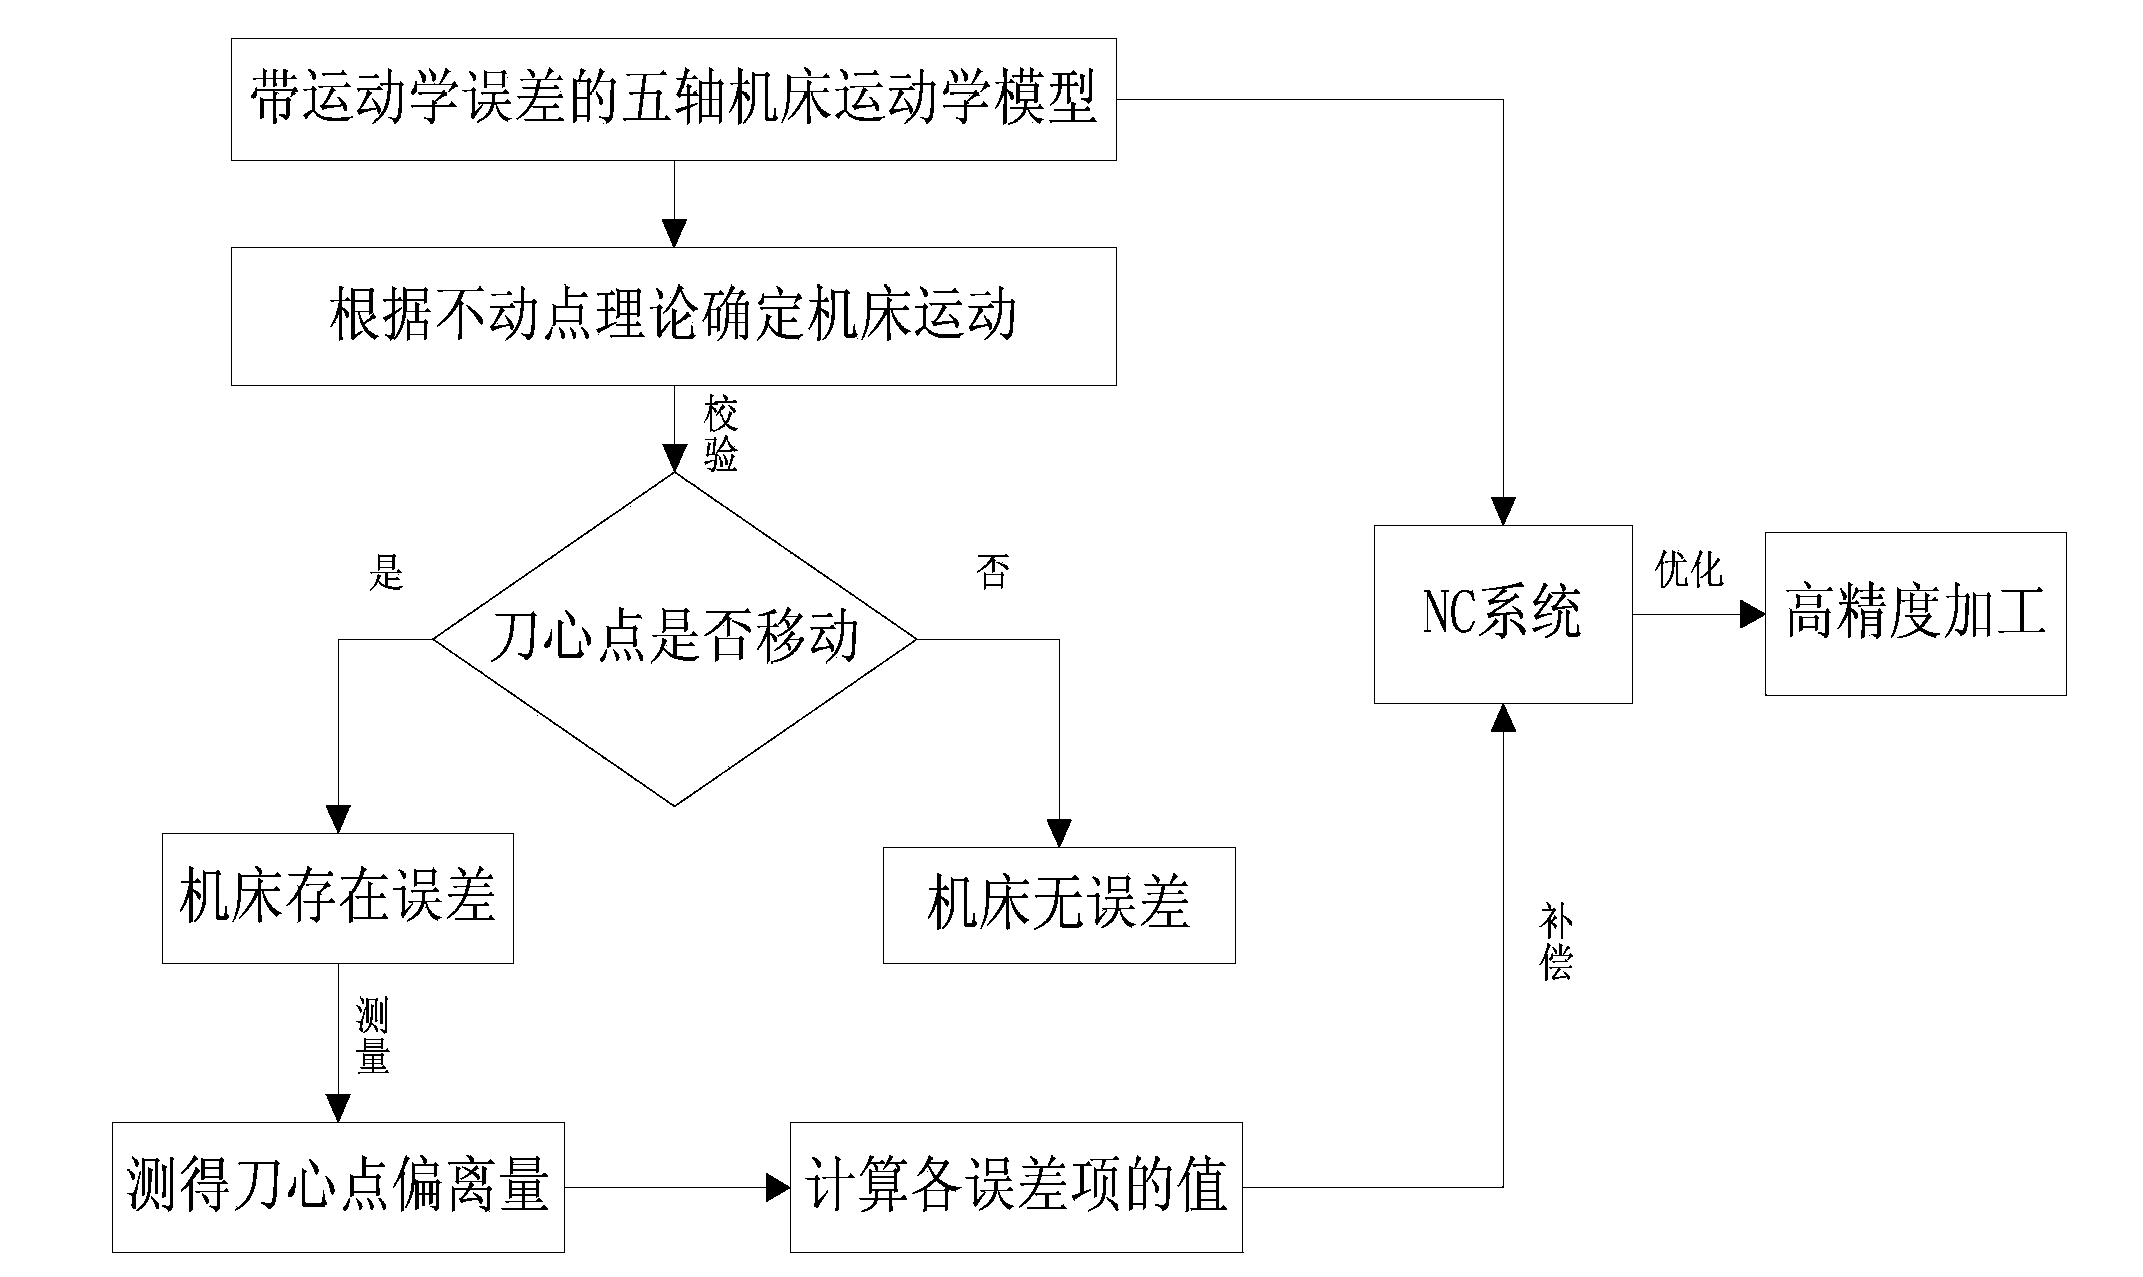 Error verification method of CA oscillating structure five-axis machine tool